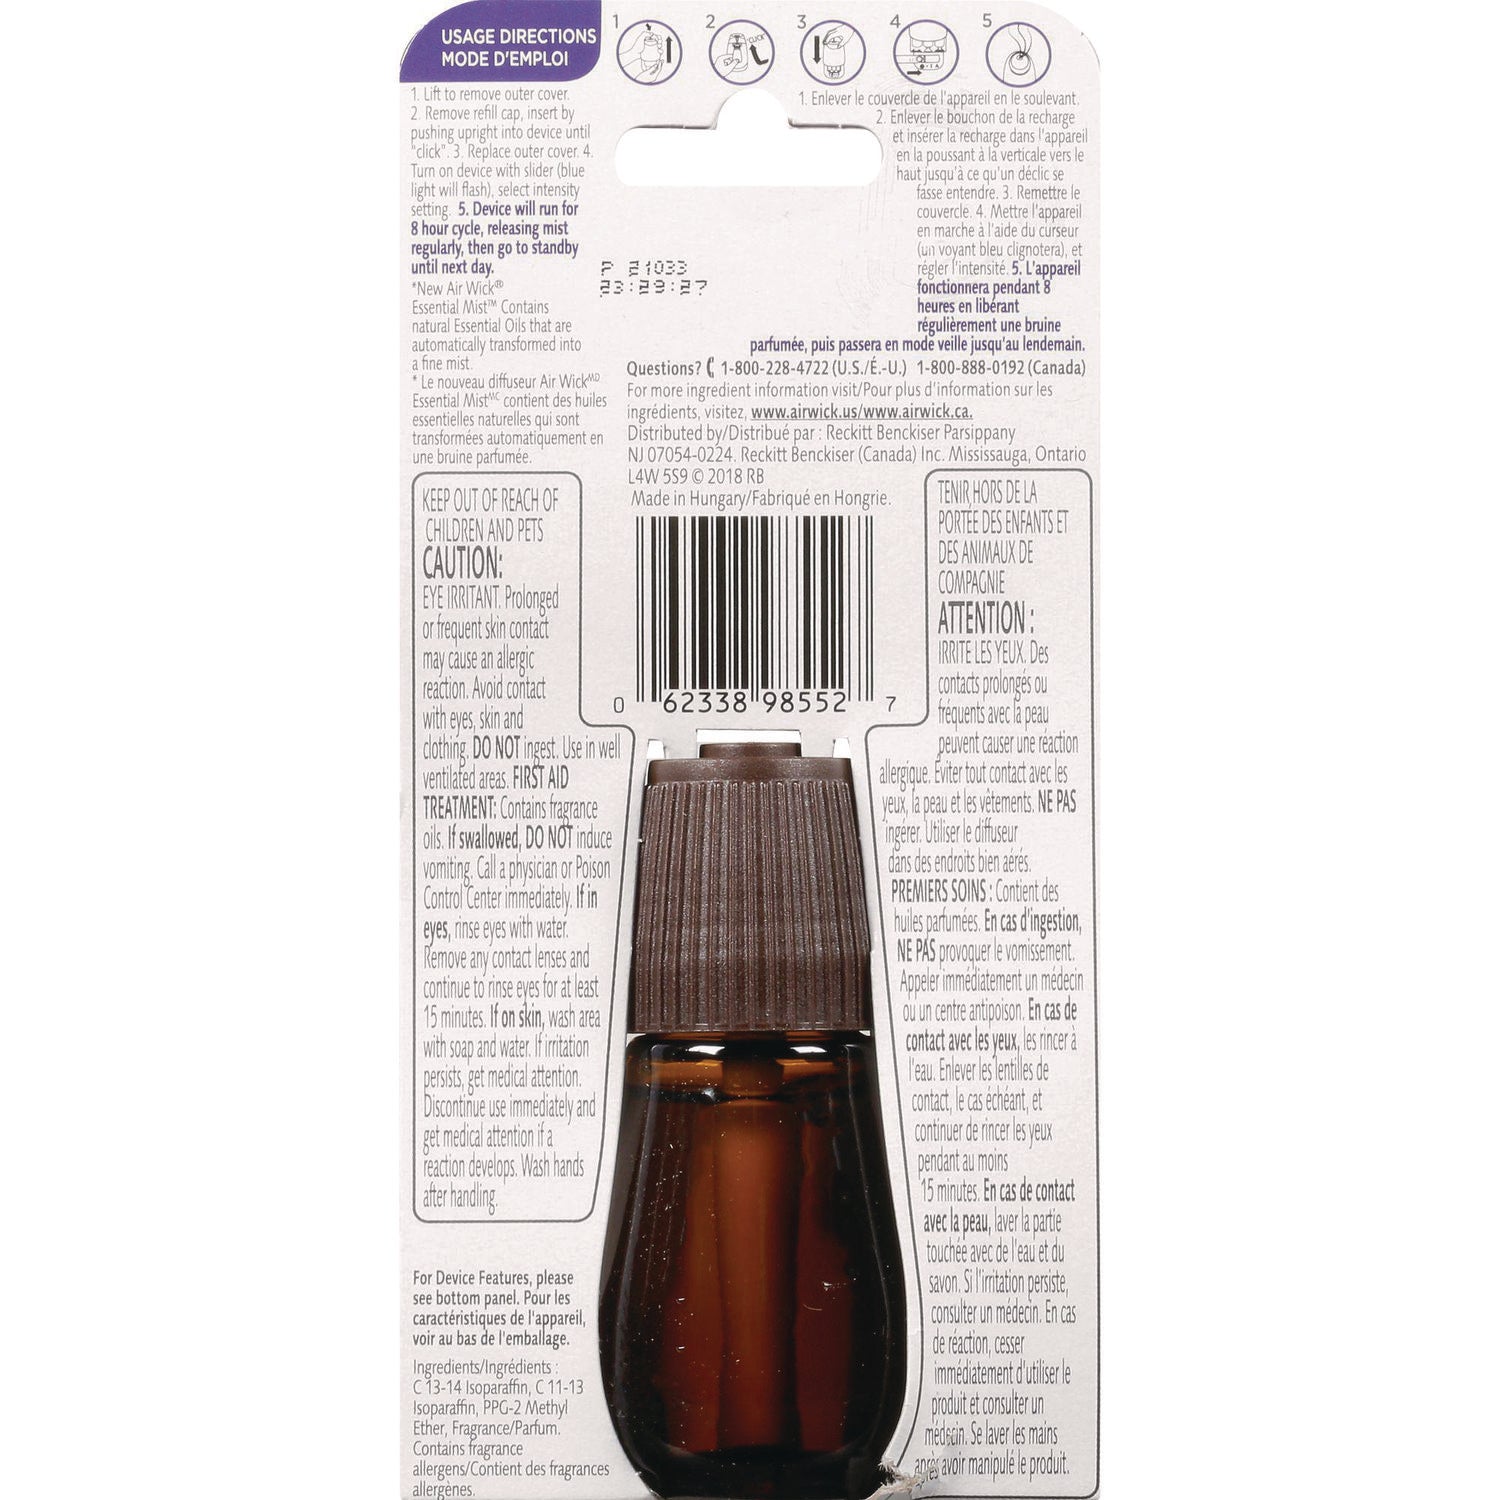 essential-mist-refill-lavender-and-almond-blossom-067-oz-bottle-6-carton_rac98552 - 8